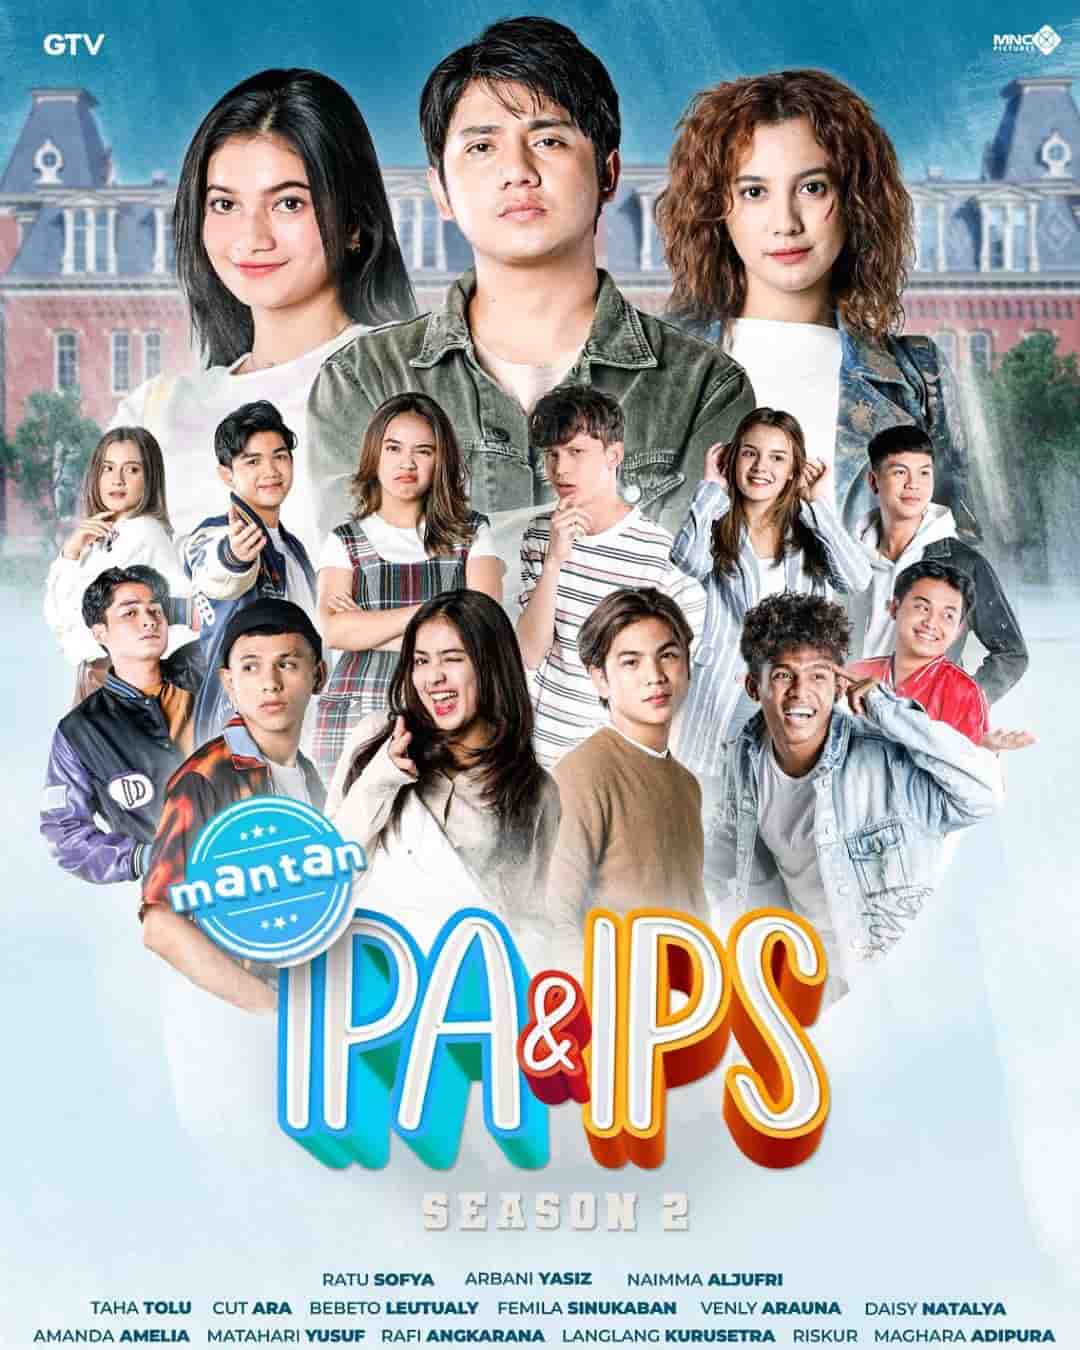 Mantan IPA & IPS Season 2 - Sinopsis, Pemain, OST, Episode, Review